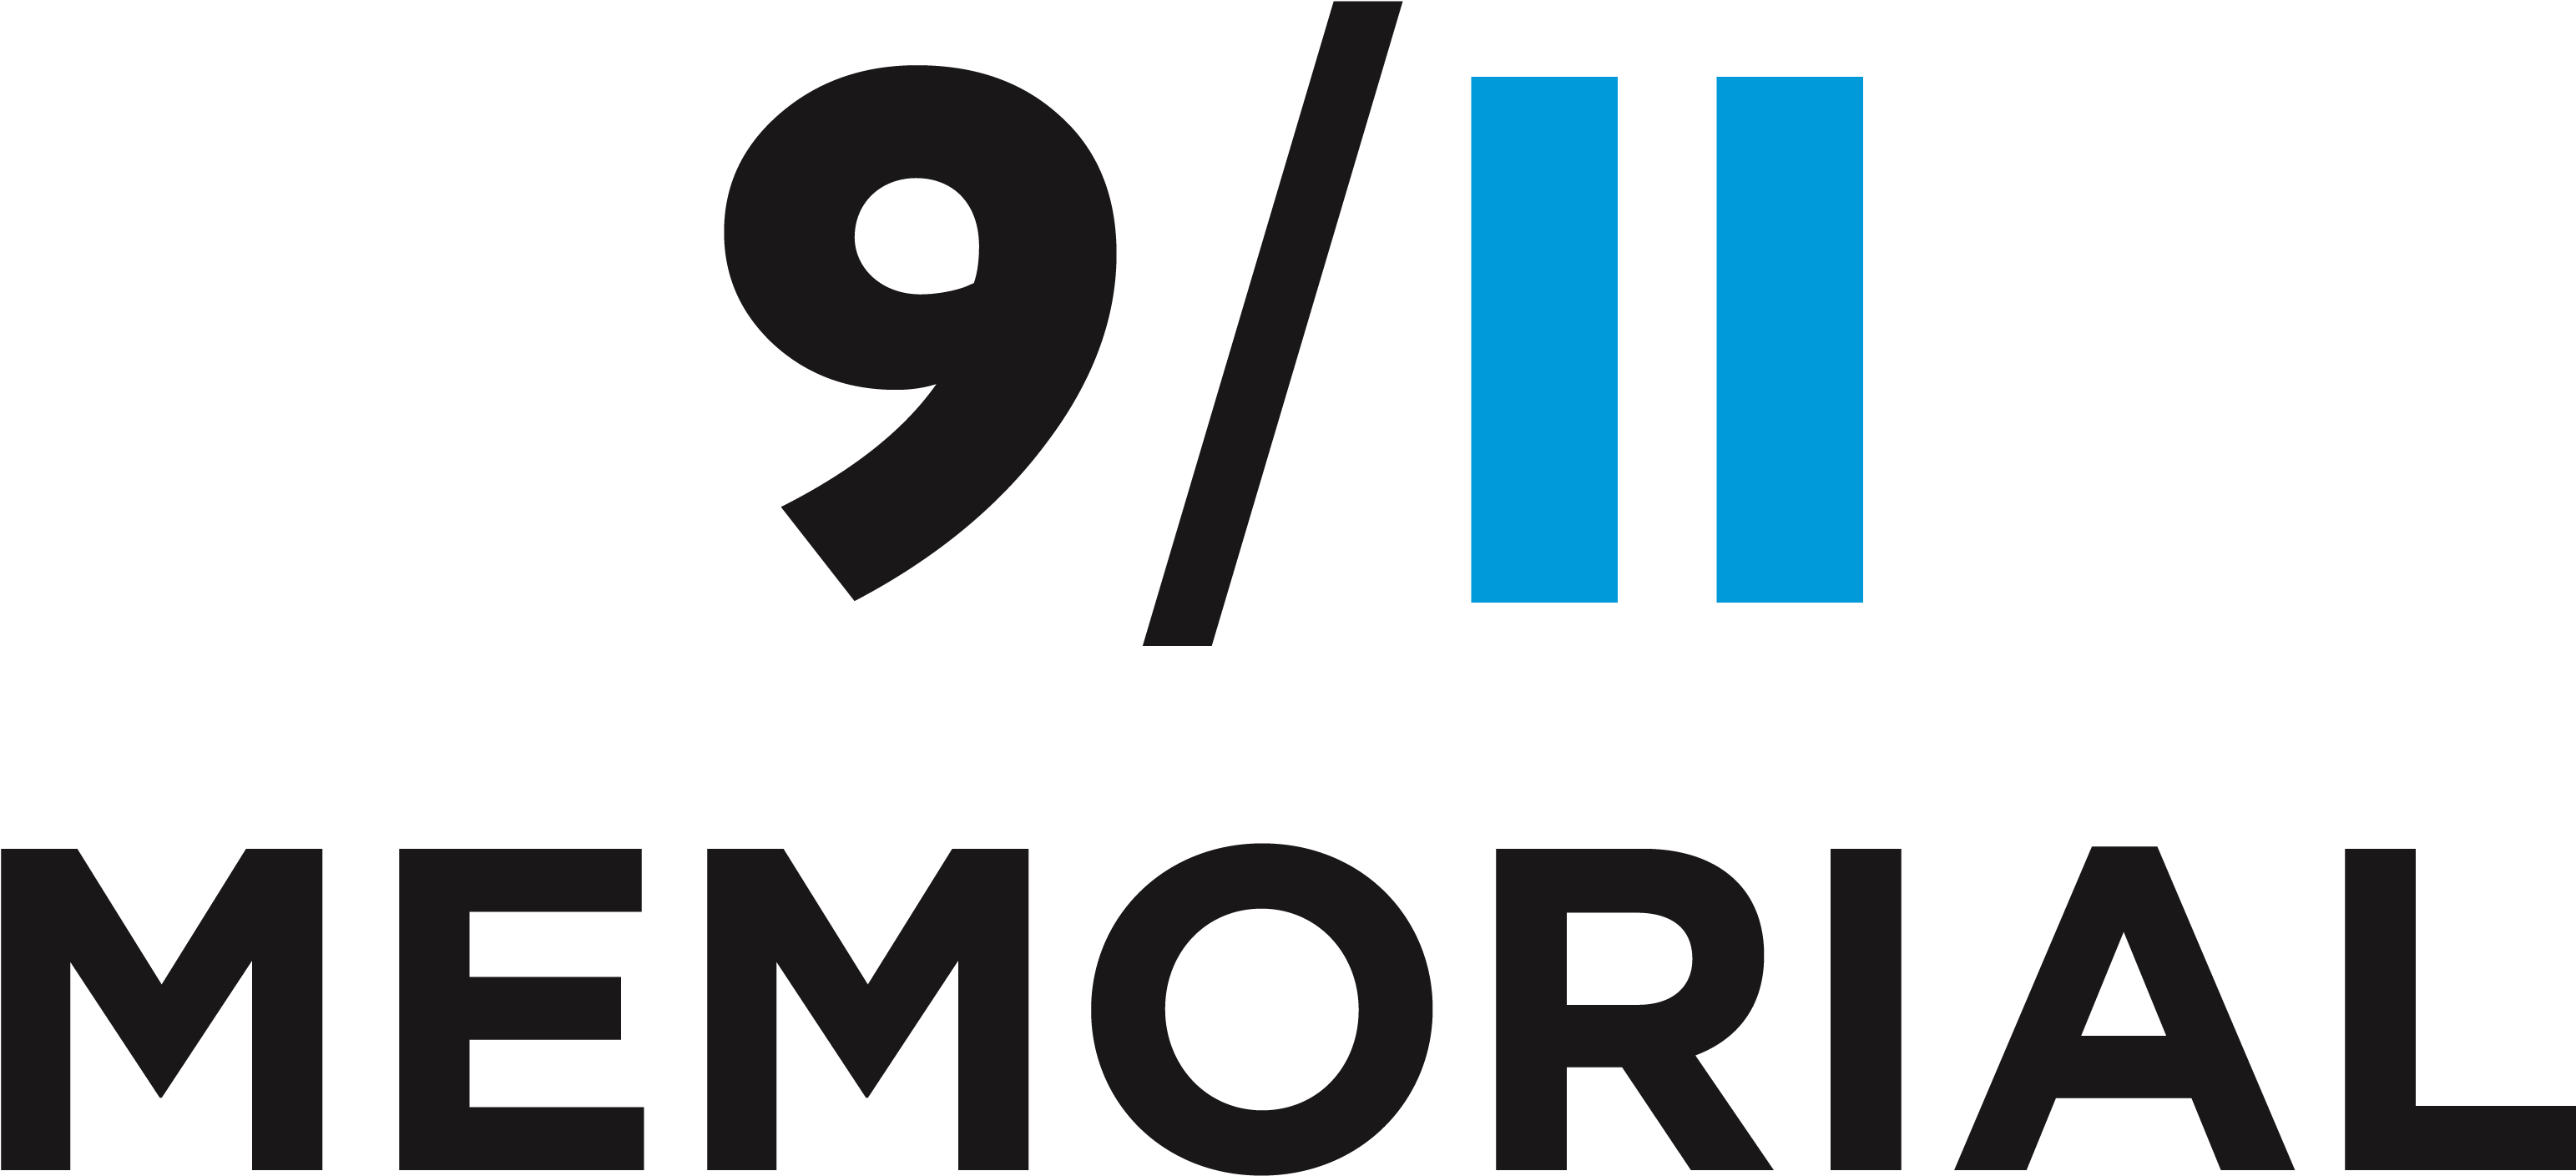 The World Trade Center Memorial Logo - Memorial Day Email Message (3196x1571)